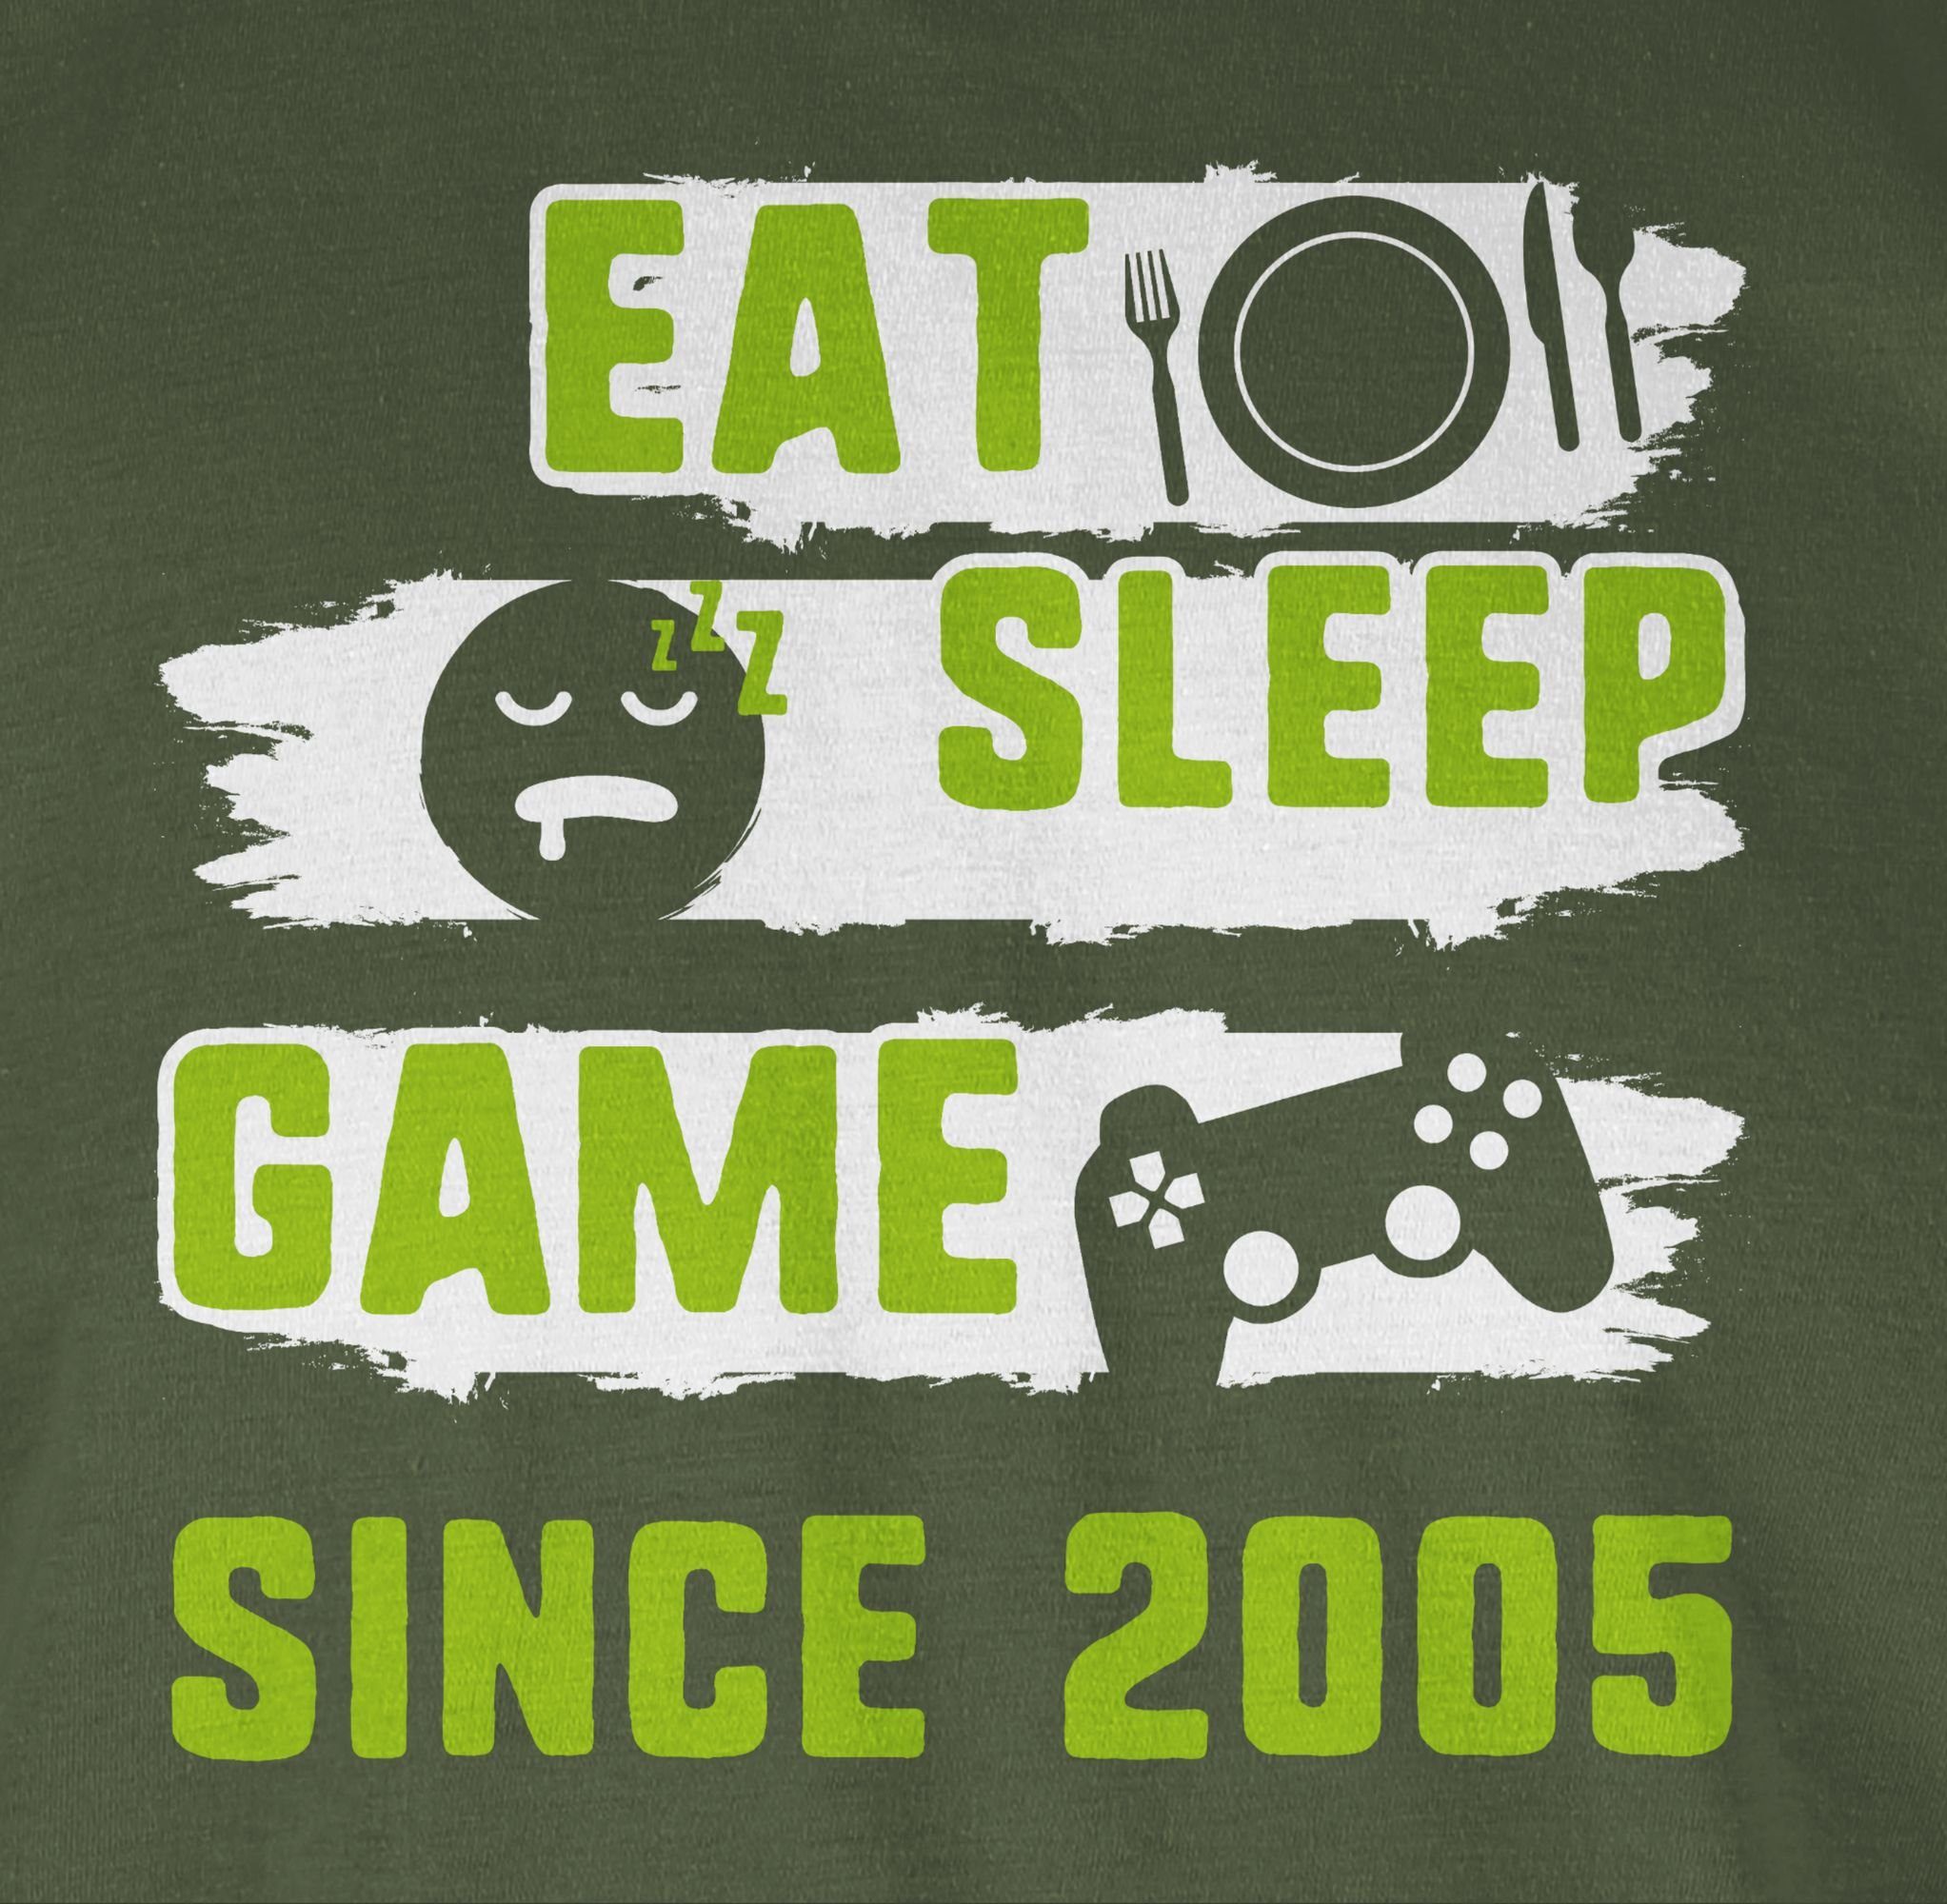 Shirtracer T-Shirt 2 Grün Game Eat Since 18. Achtzehn 2005 Sleep Army Geburtstag